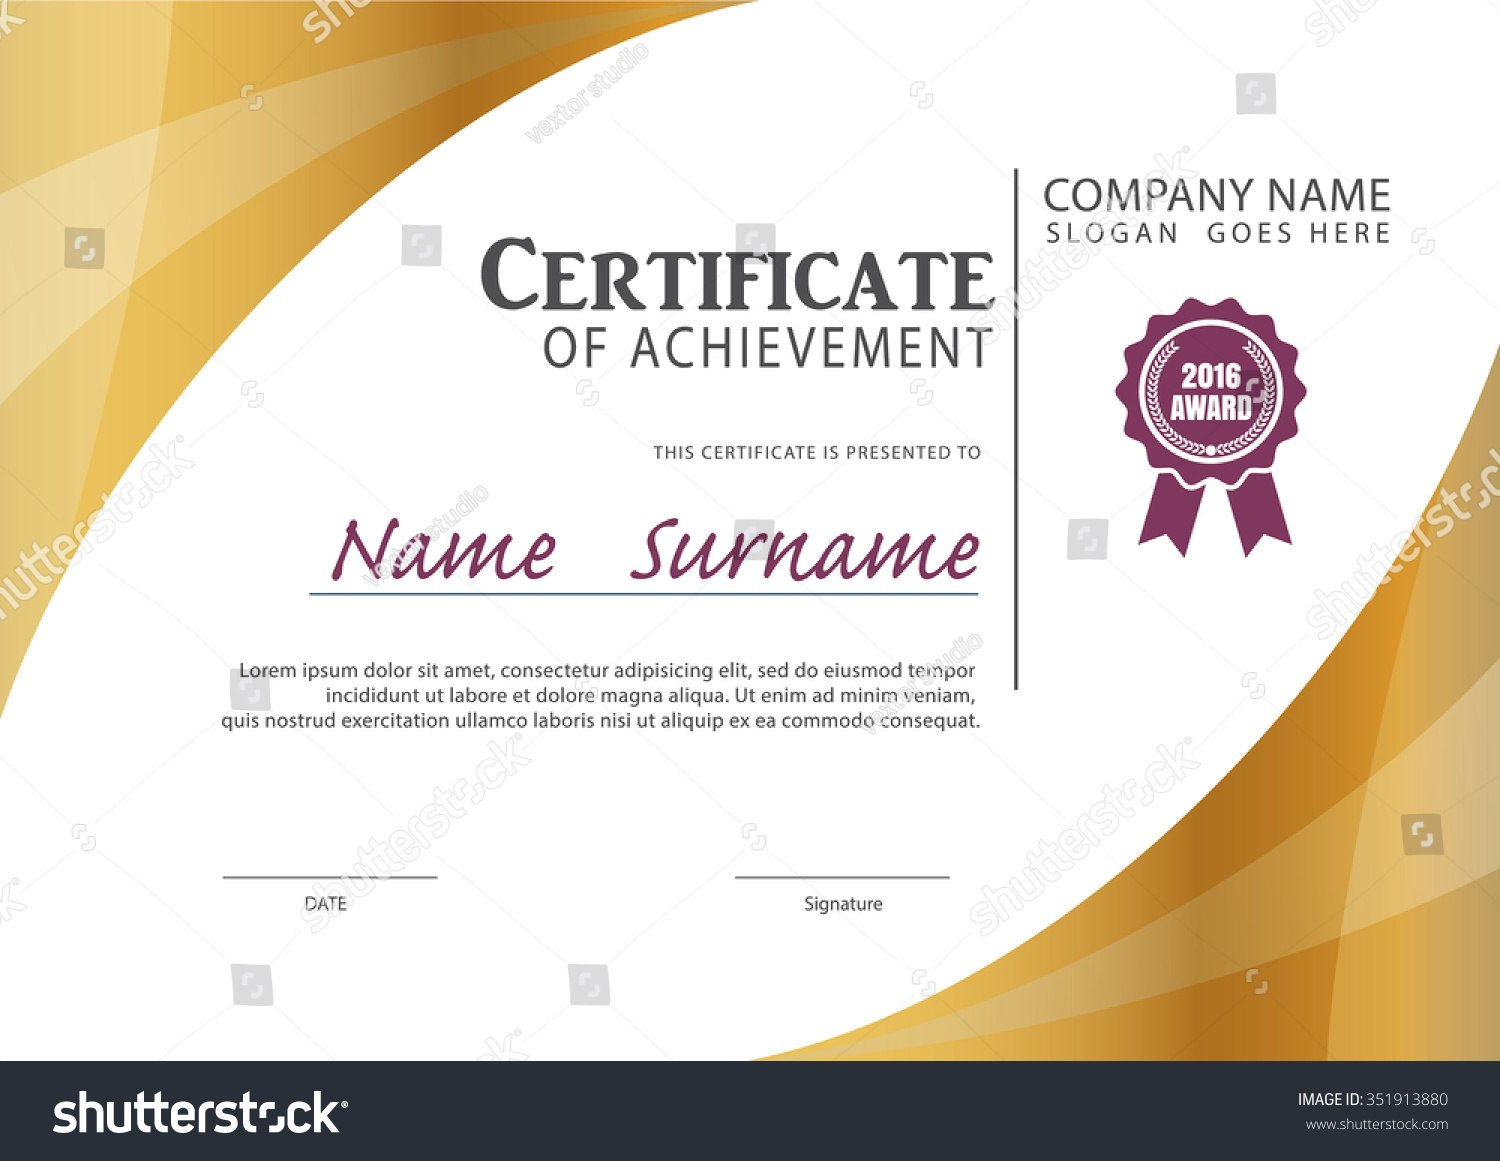 Certificate Template Size  Sansurabionetassociats within Certificate Template Size